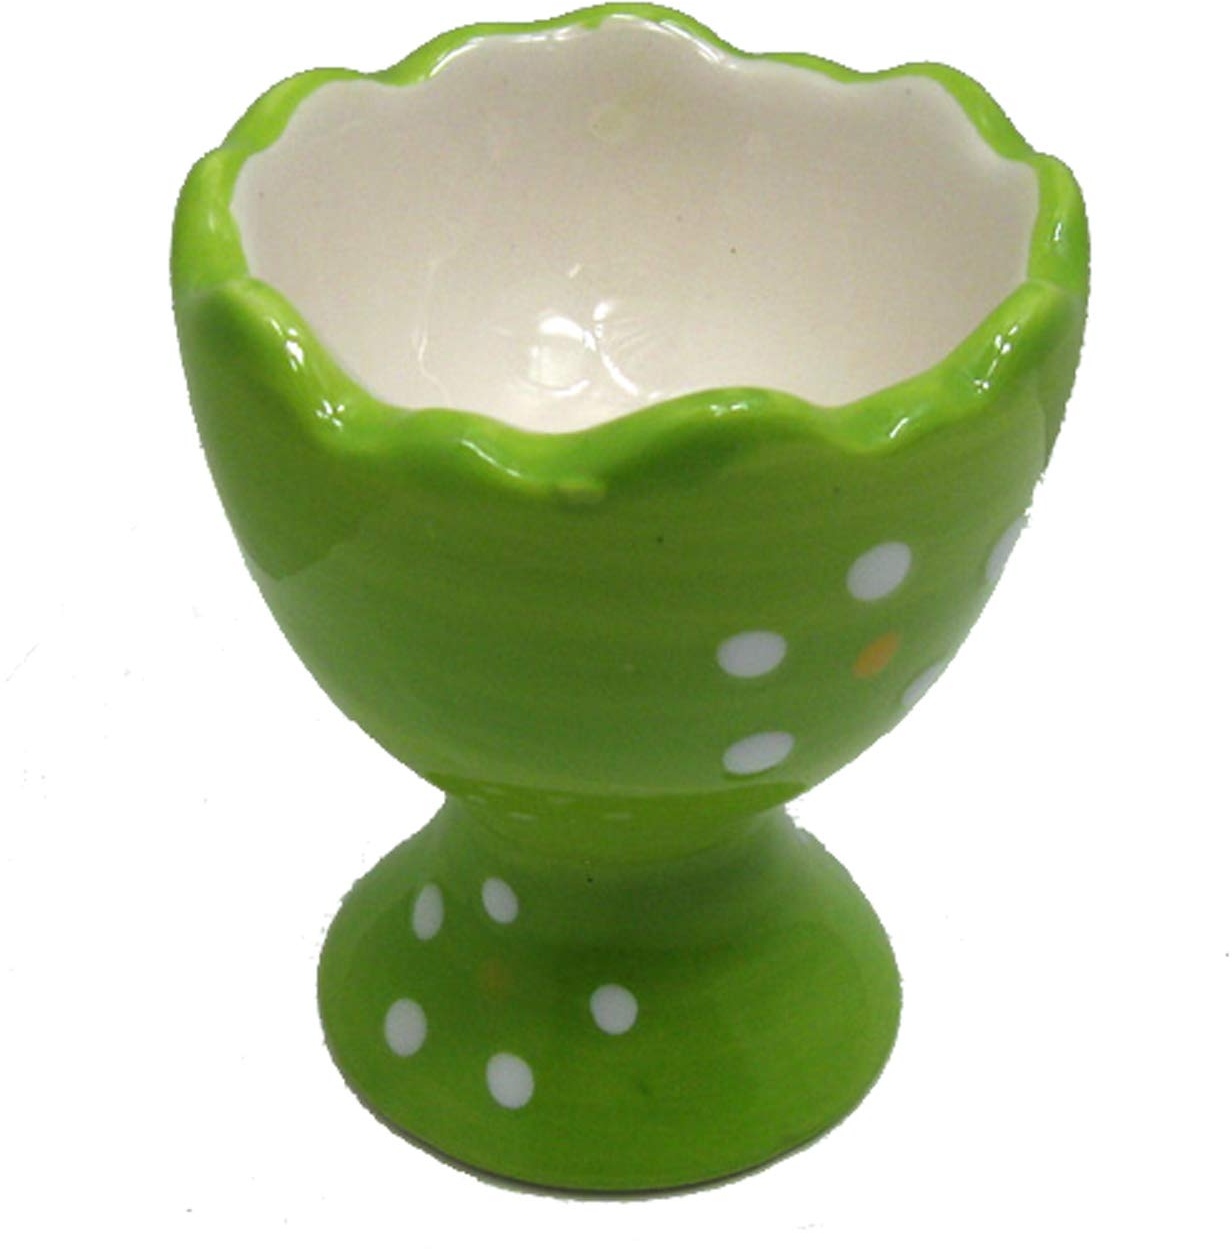 Land-Haus-Shop Eierbecher aus Keramik in grün, Oster Ei Eier Becher (1 Stück), für Küche, Ostern, Deko (LHS)